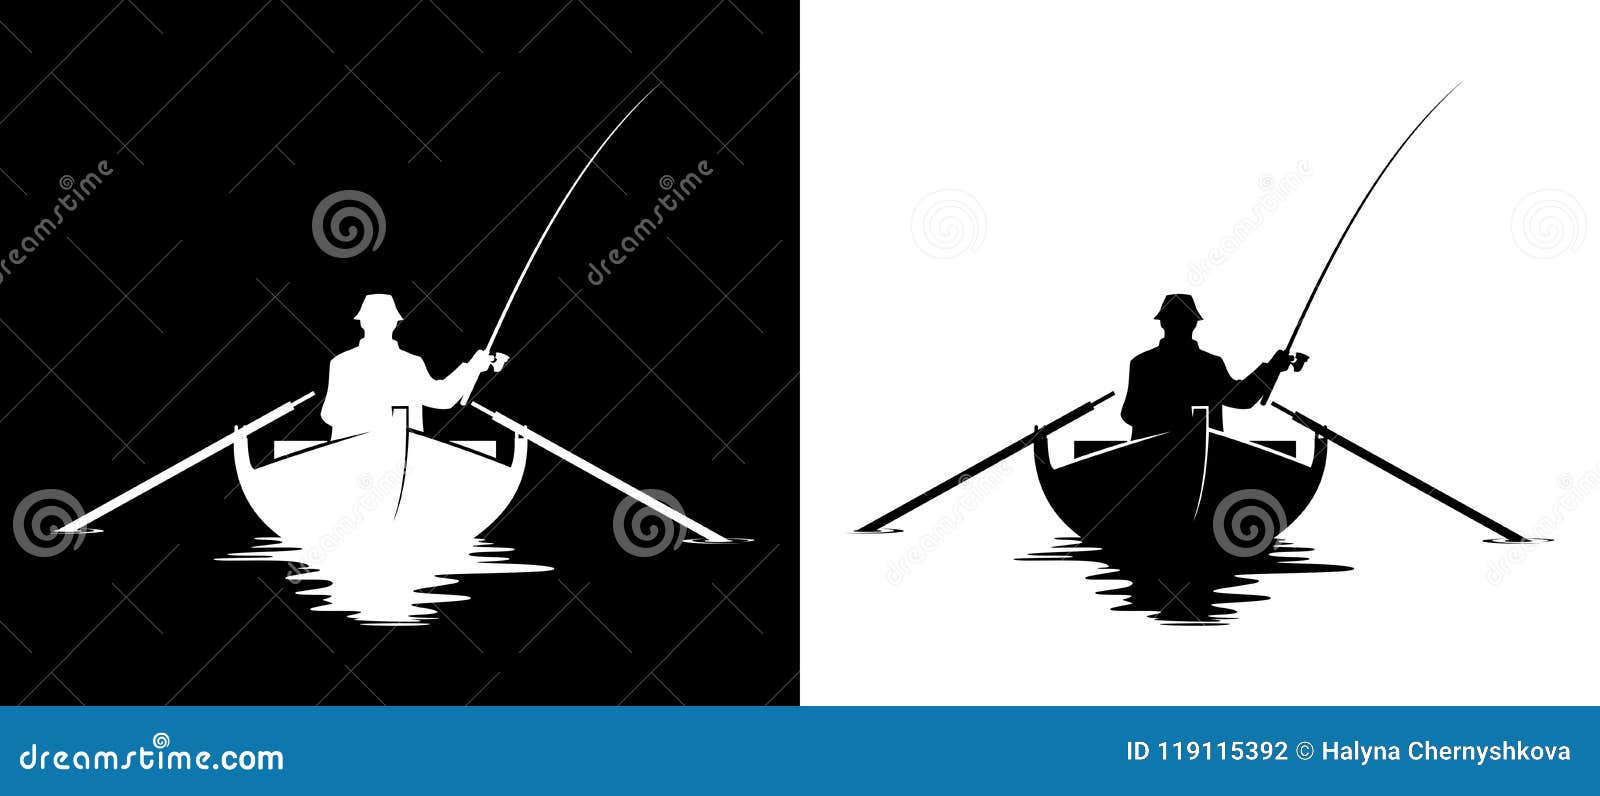 Download Fisherman In Boat Silhouette Stock Vector - Illustration ...